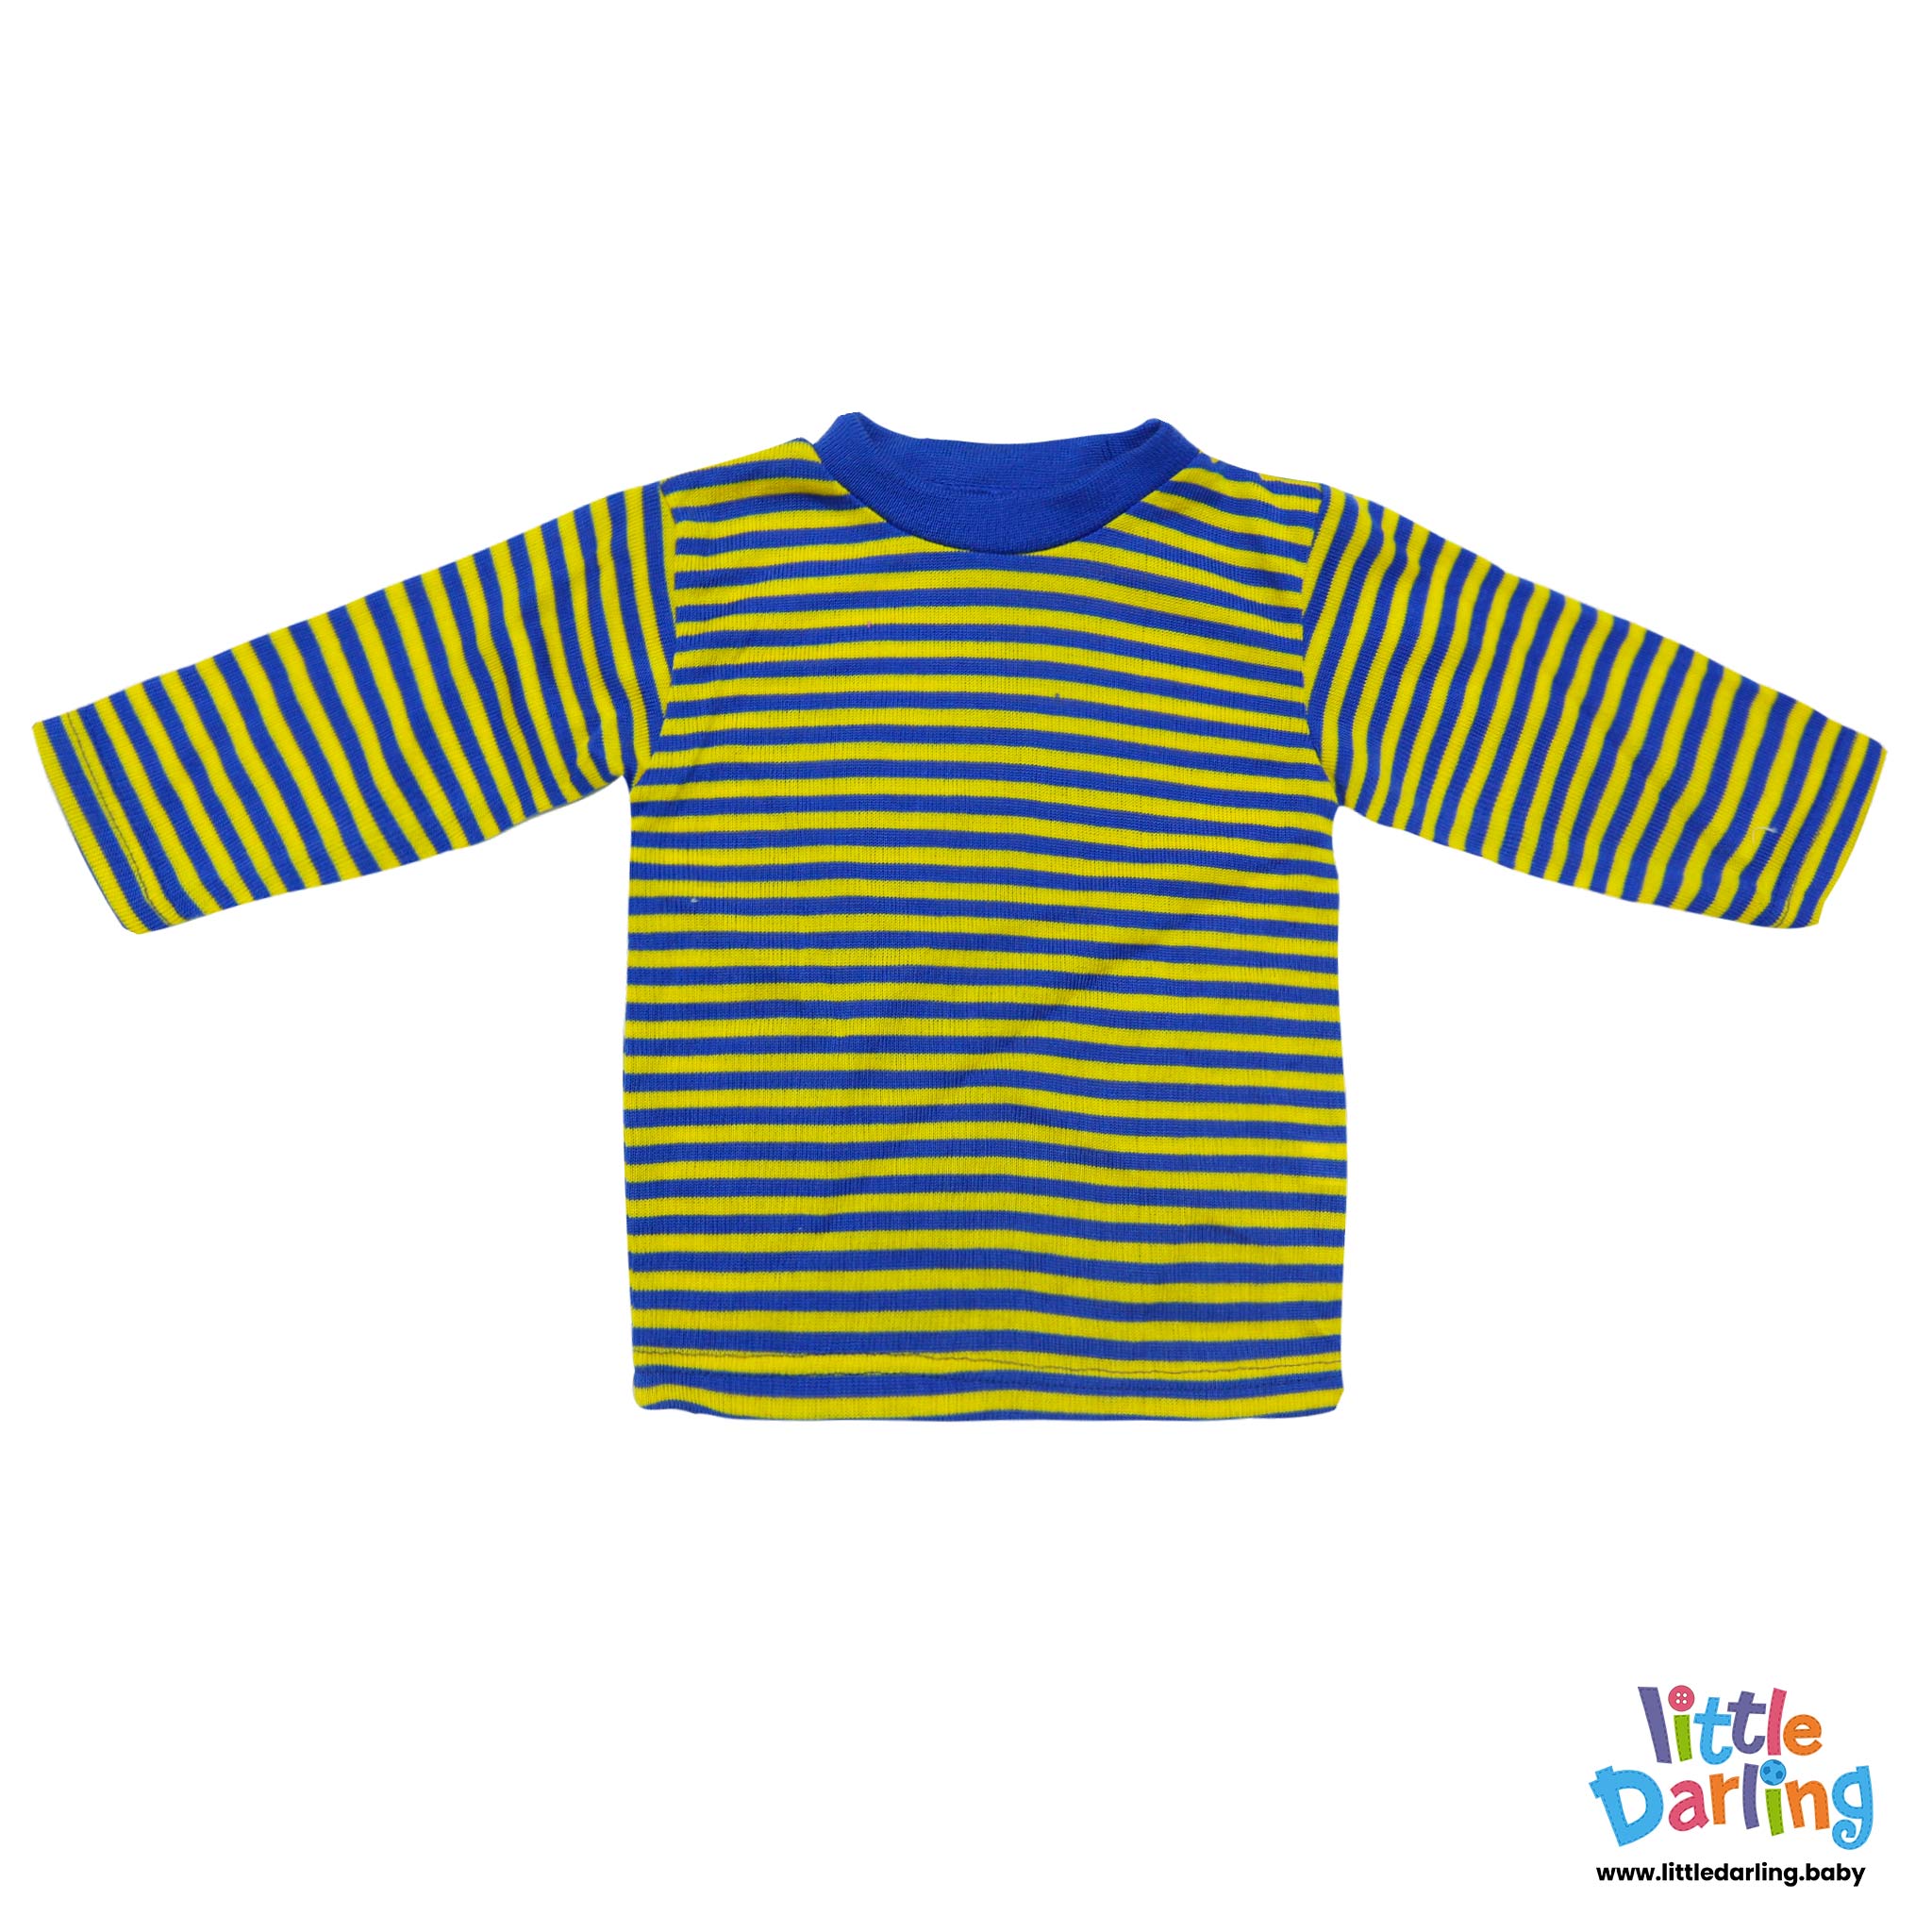 Woolen Jumpsuit Yellow Stripes Blue Color by Little Darling